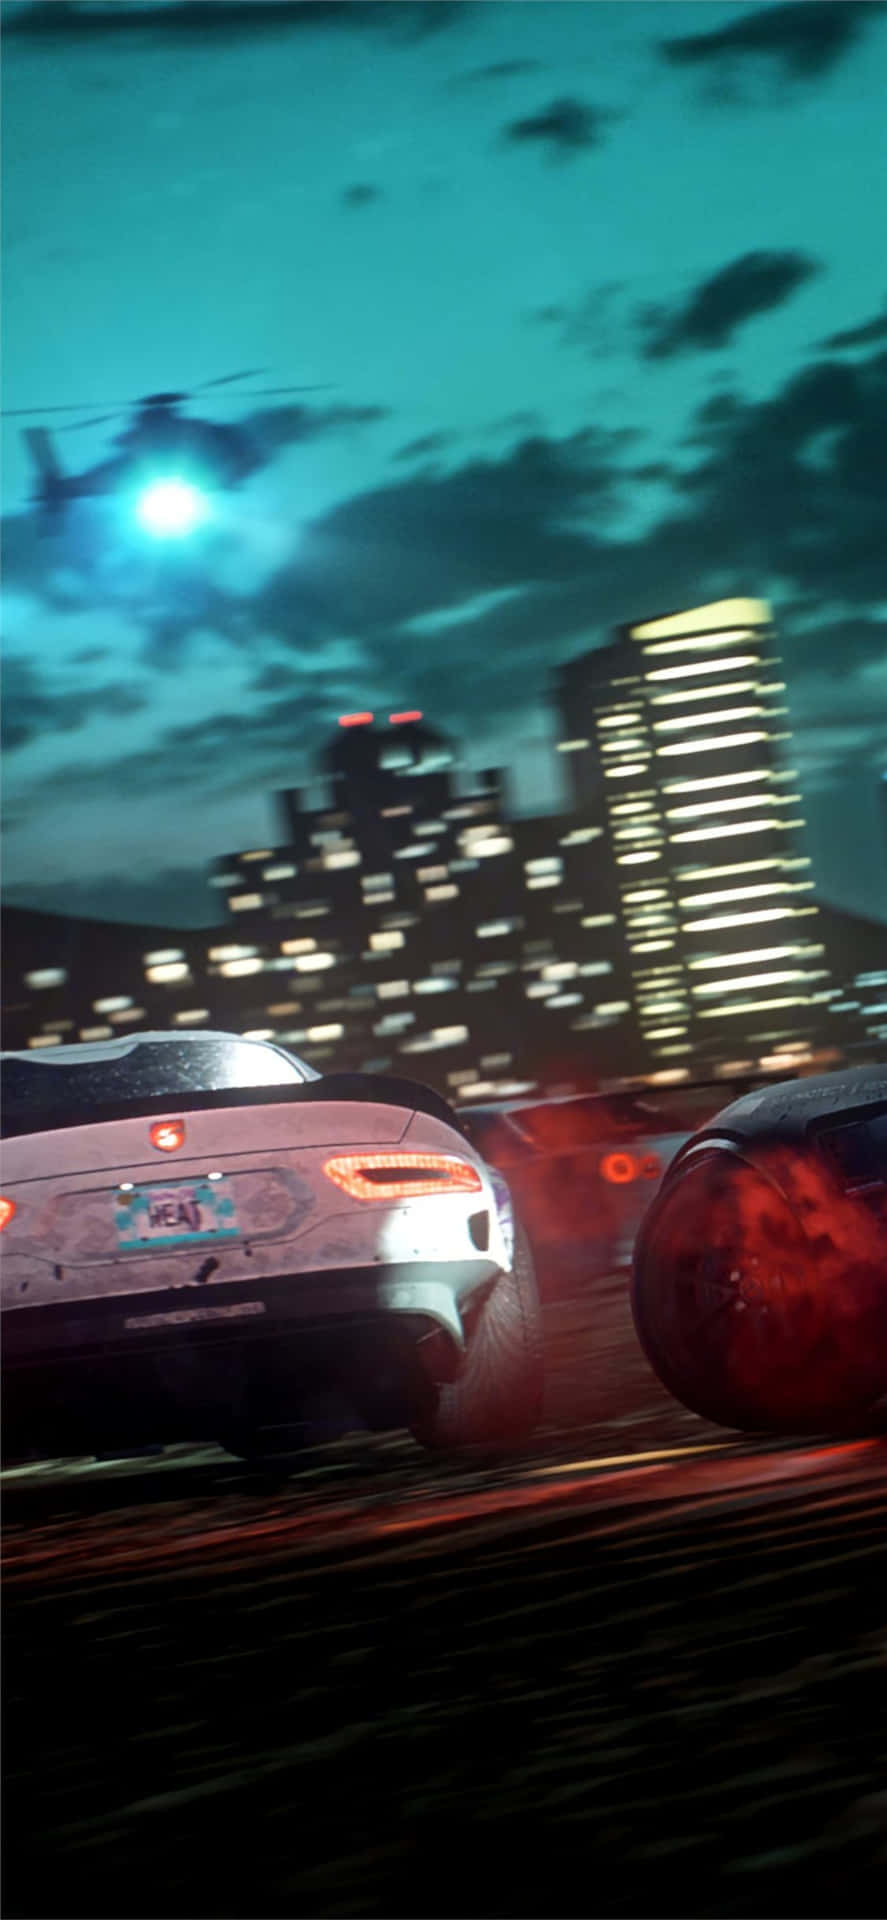 Iphonexs Max Behöver En Need For Speed Heat Stadsbildsbakgrund.